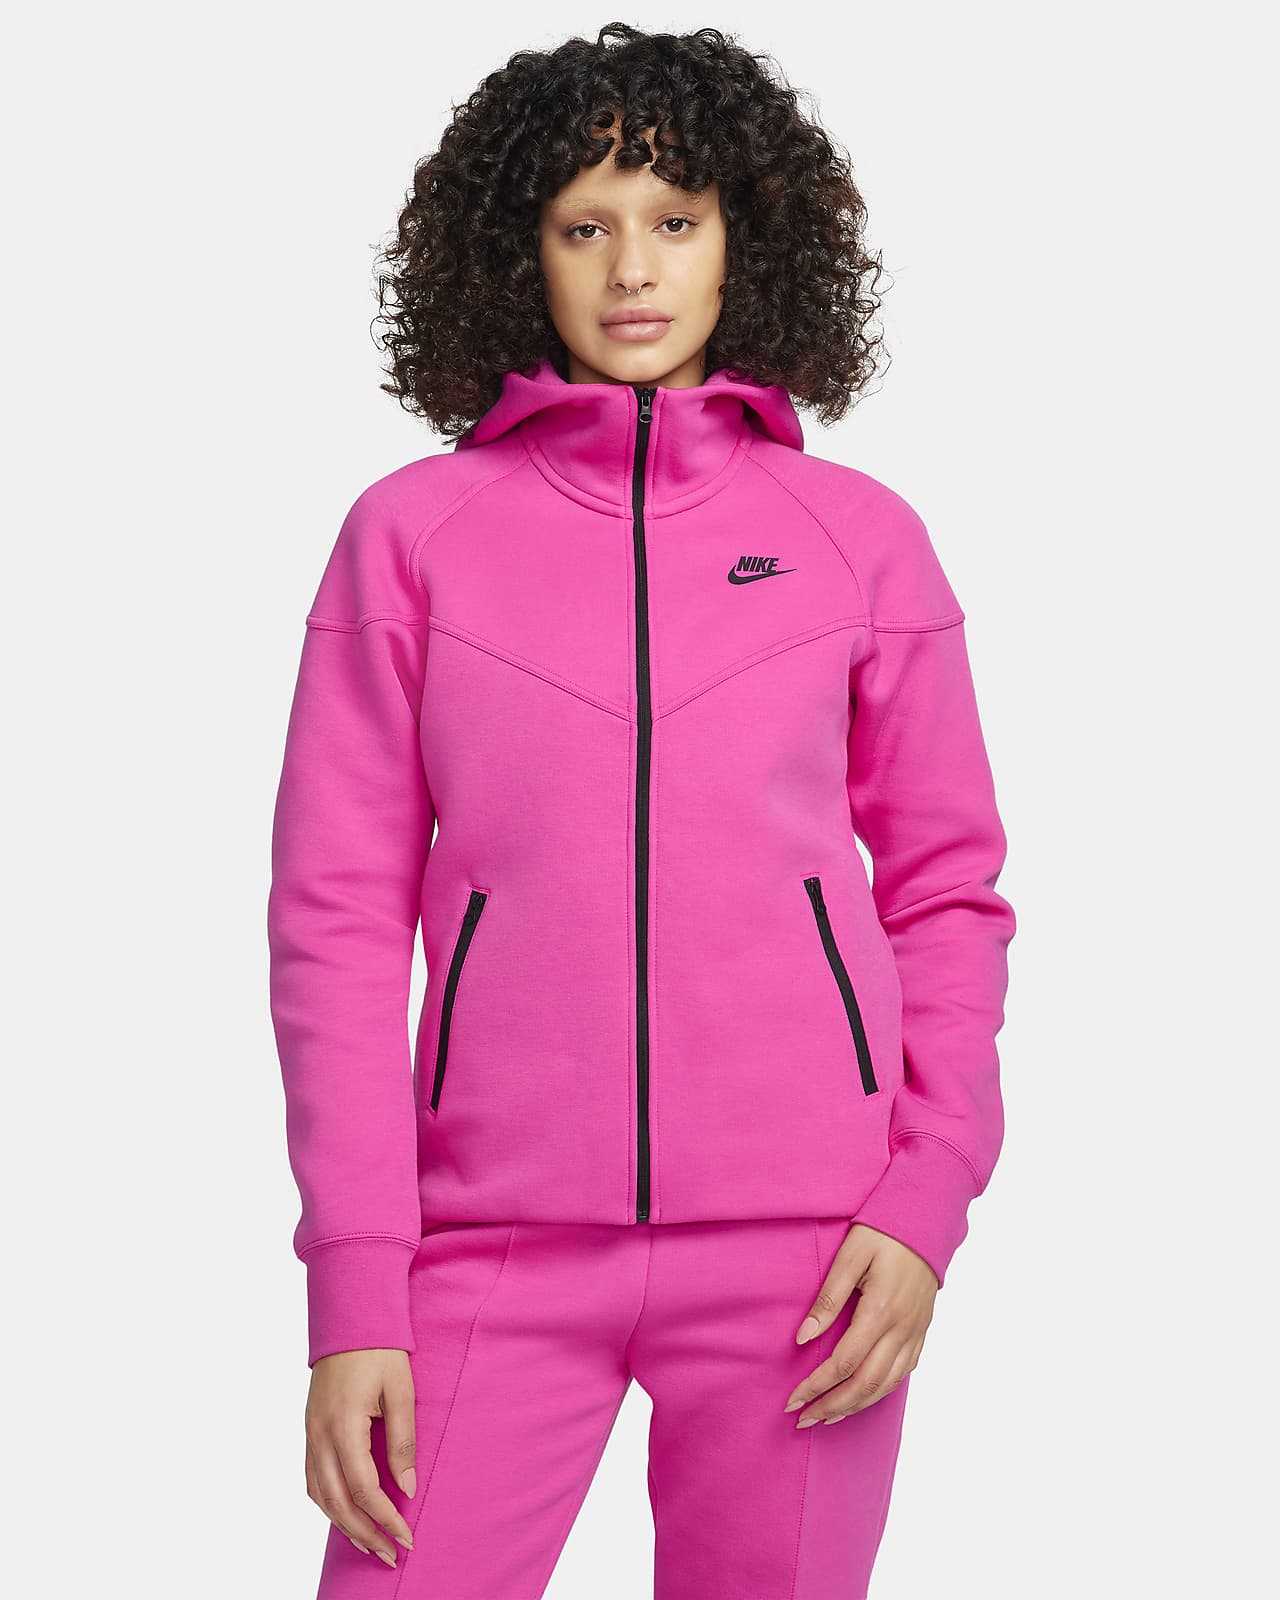 Nike Sportswear Tech Fleece Windrunner Dessuadora amb caputxa i cremallera completa - Dona